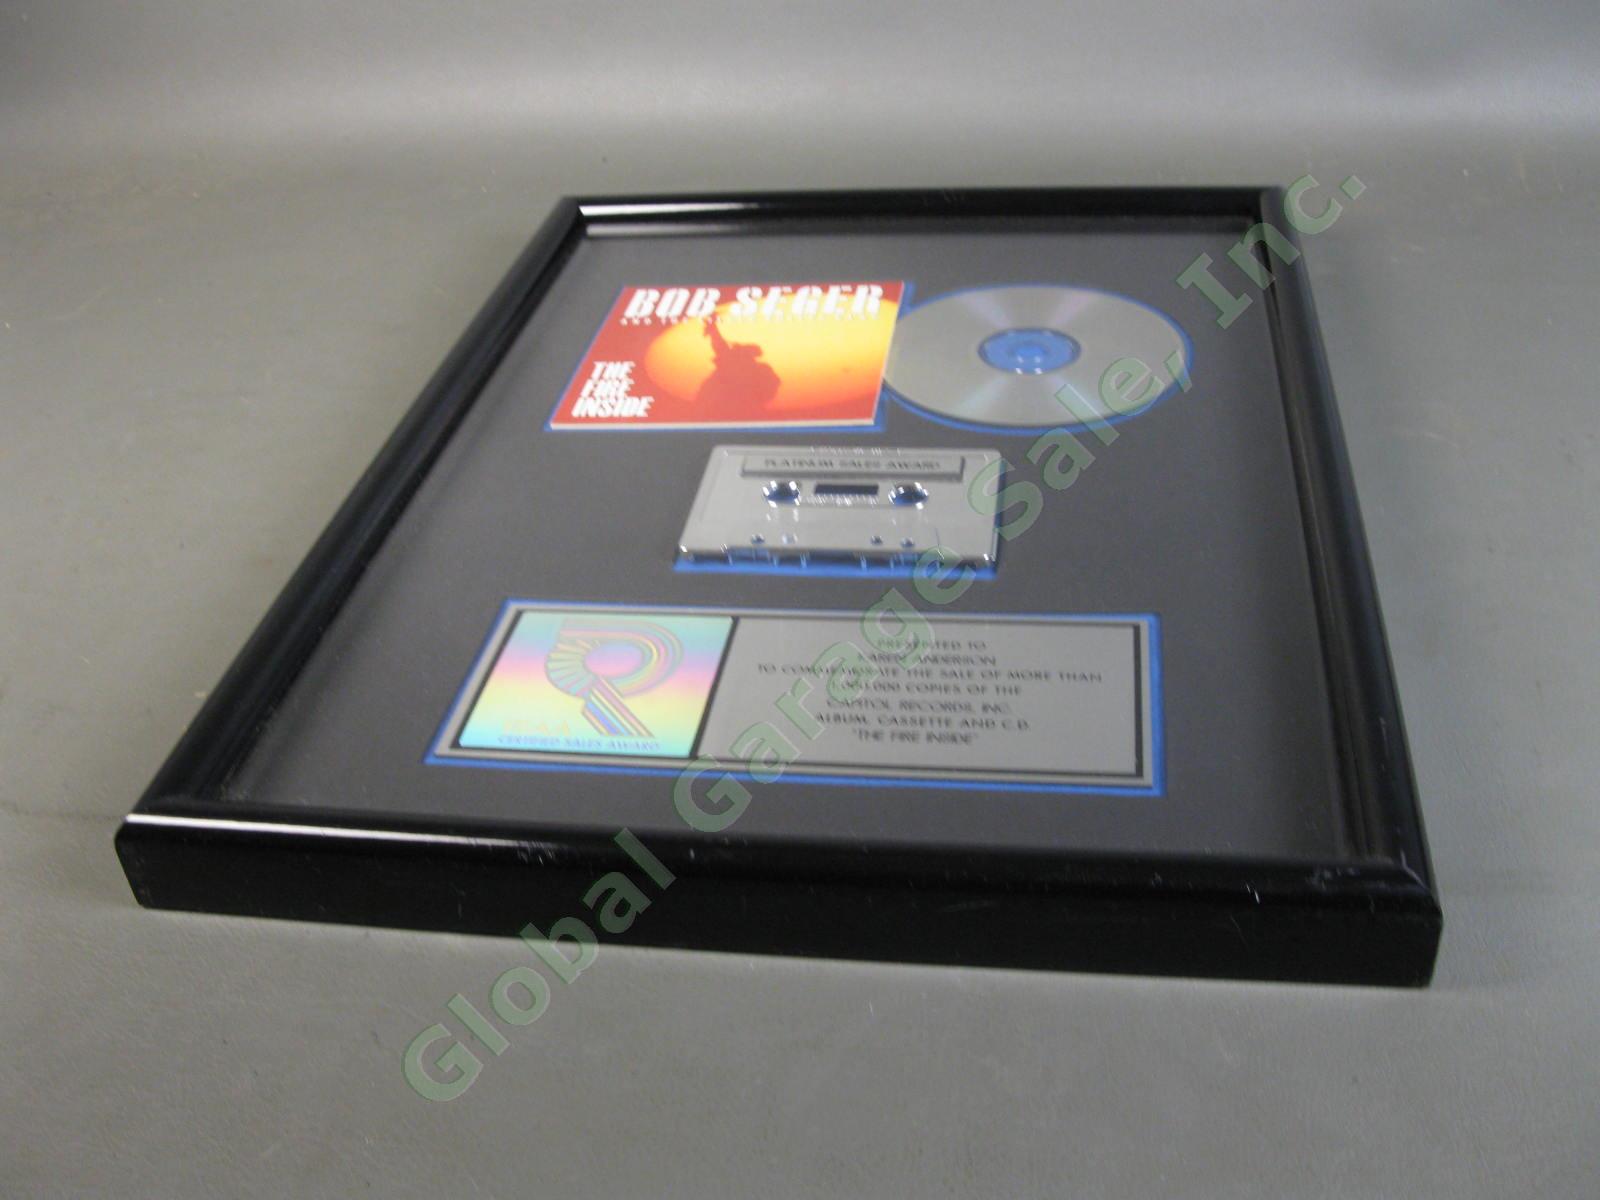 RIAA Bob Seger Silver Bullet Band The Fire Inside Platinum Record Sales Award NR 1